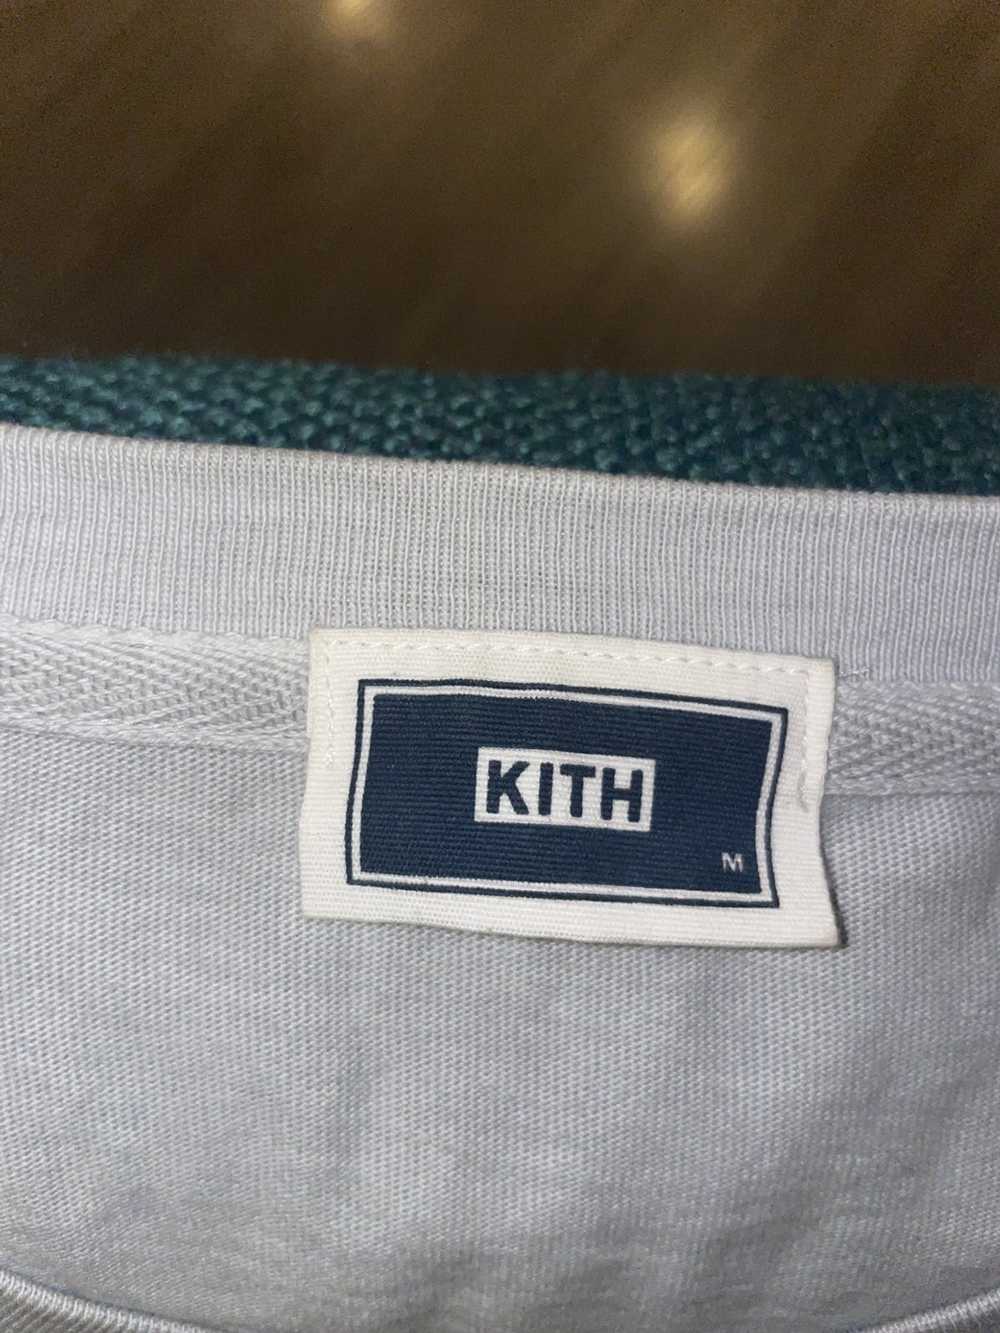 Kith Kith short sleeve t-shirt - image 7